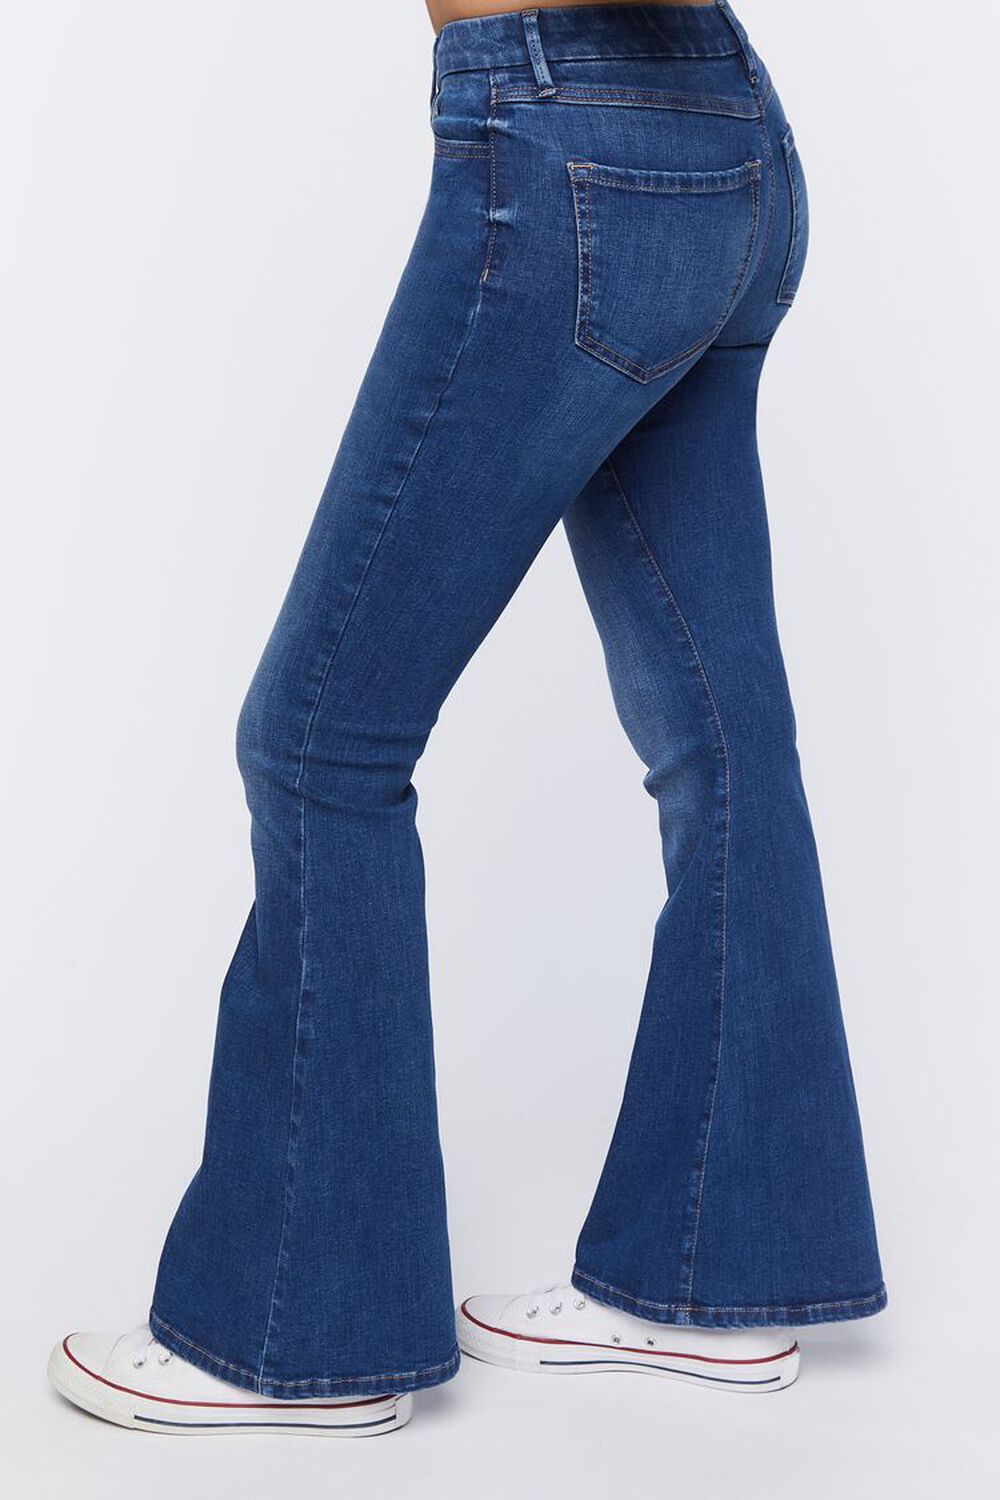 MEDIUM DENIM Stretch High-Rise Flare Jeans, image 3